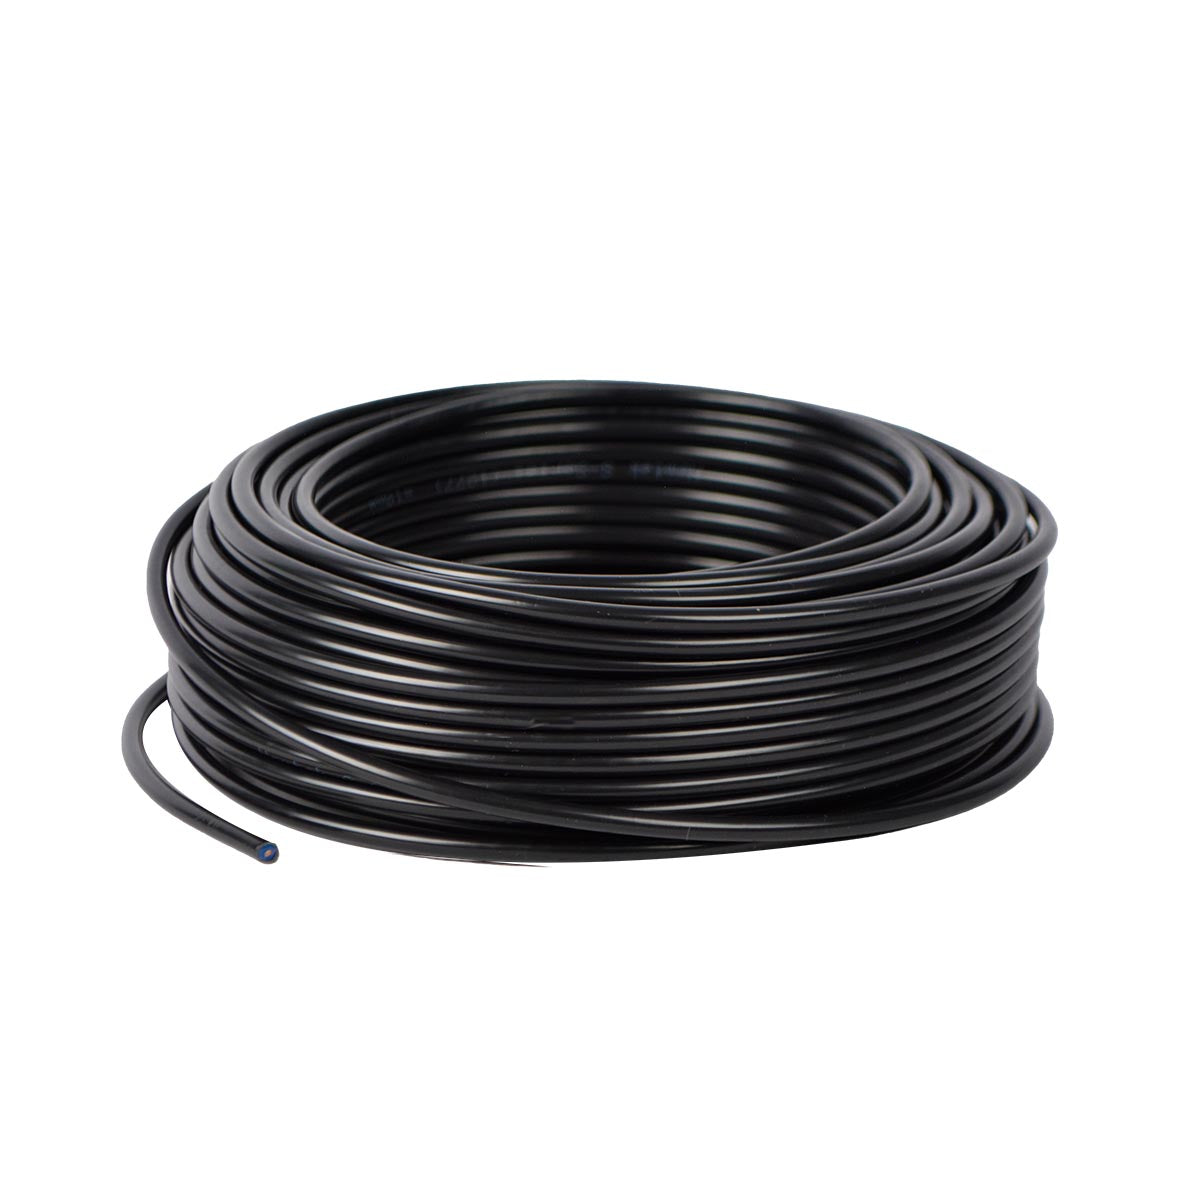 Nemtek HT Cable Slimline 30m Black Front View EF21-2